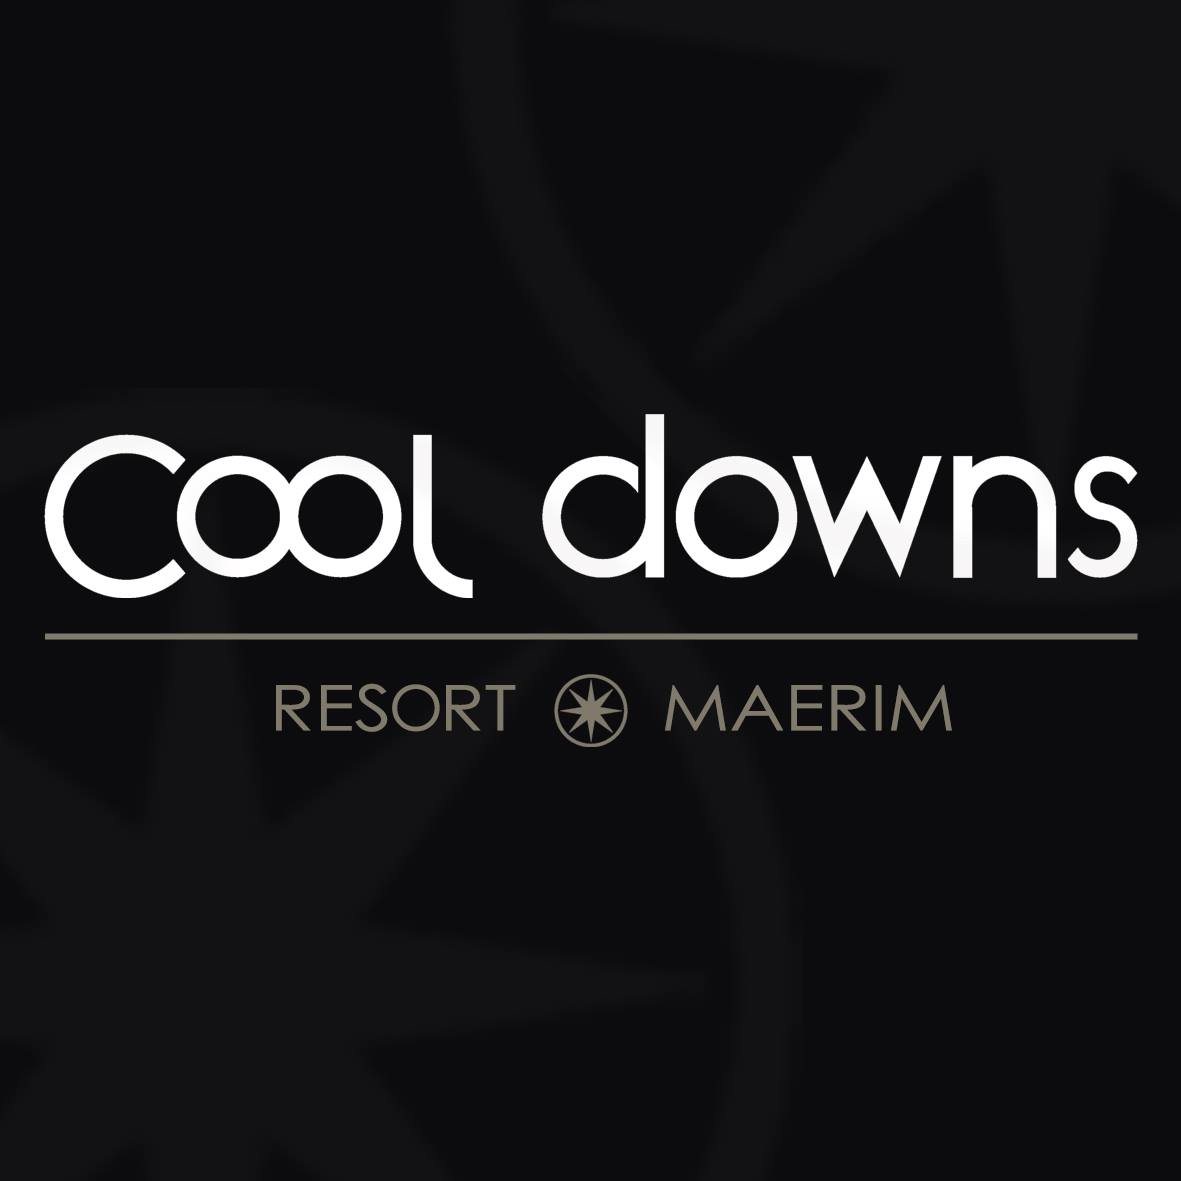 Cool Downs Resort